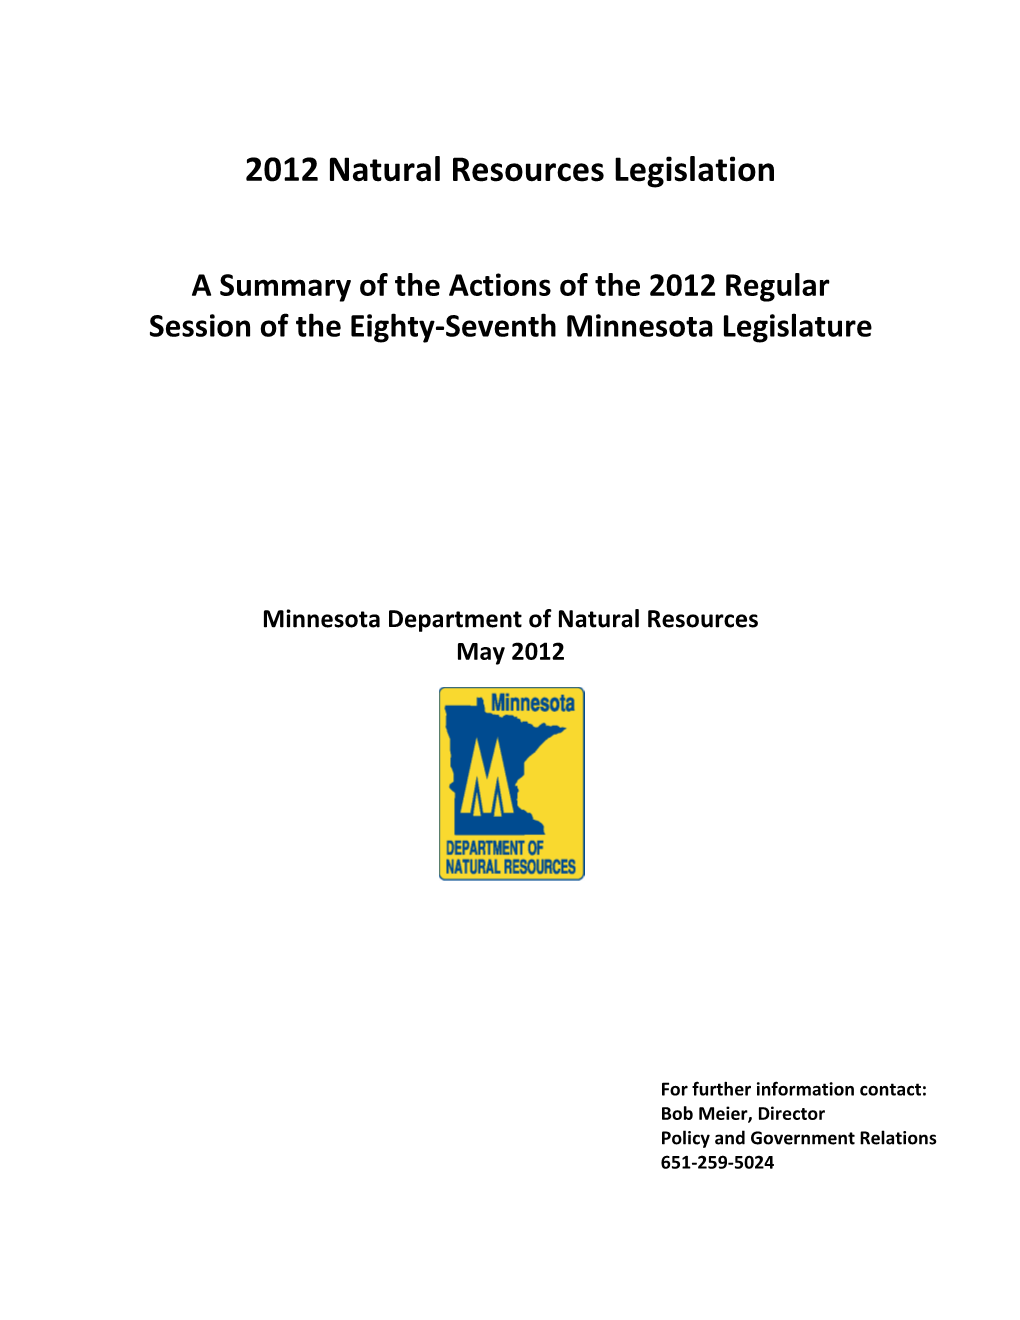 2012 Legislative Summary Minnesota Department of Natural Resources